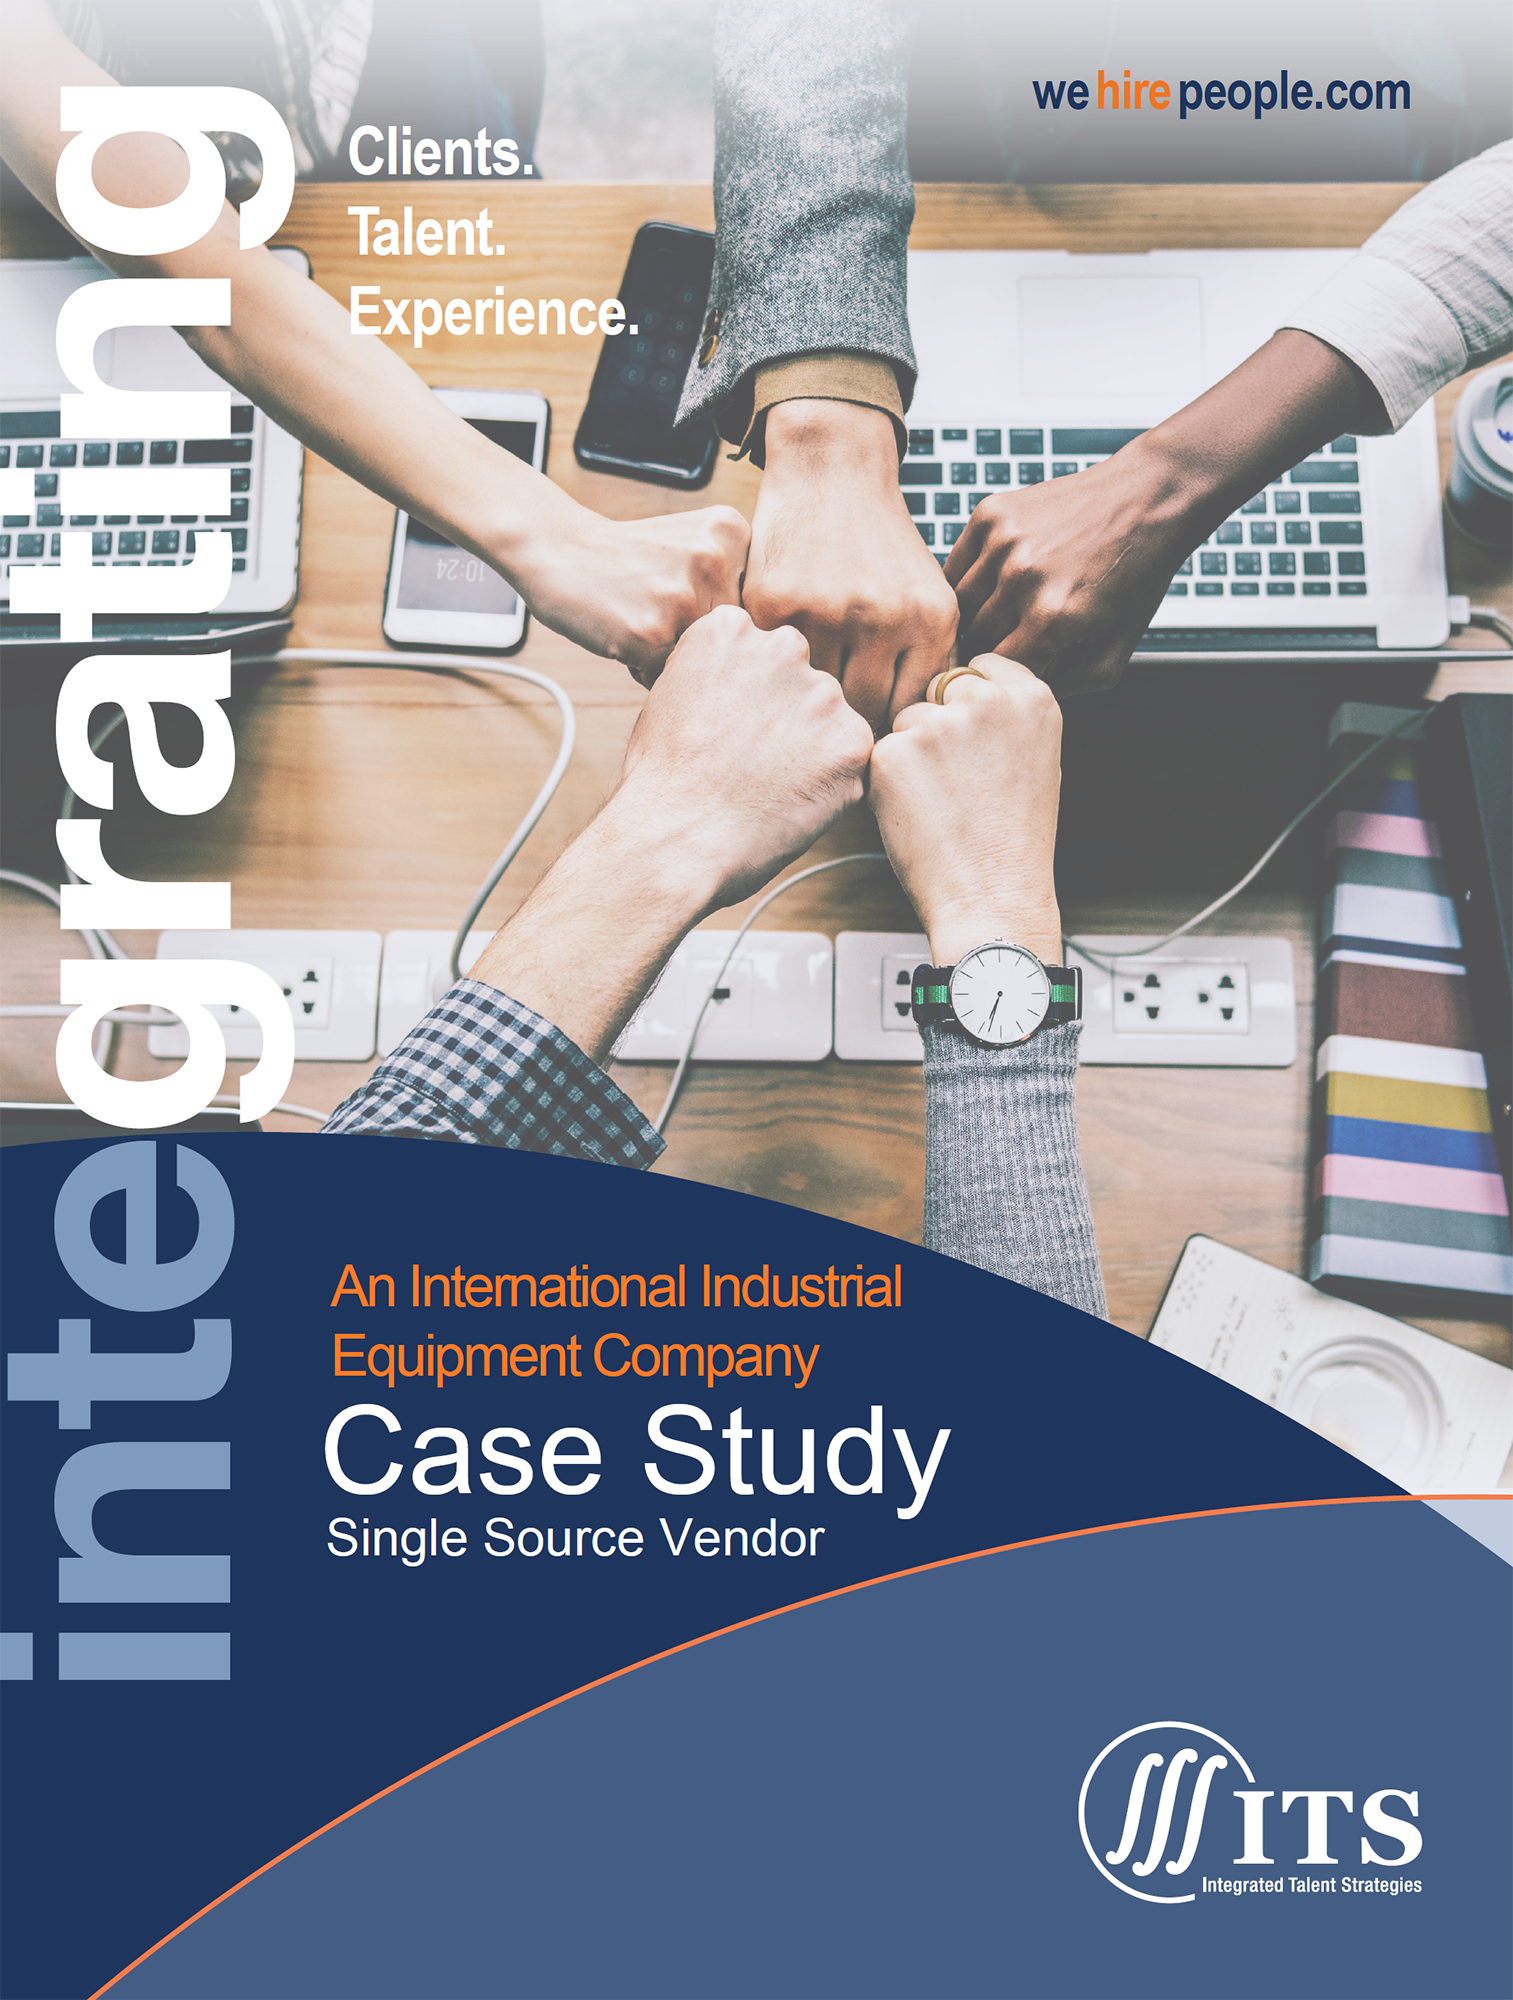 International Industrial Equipment Company - Case Study